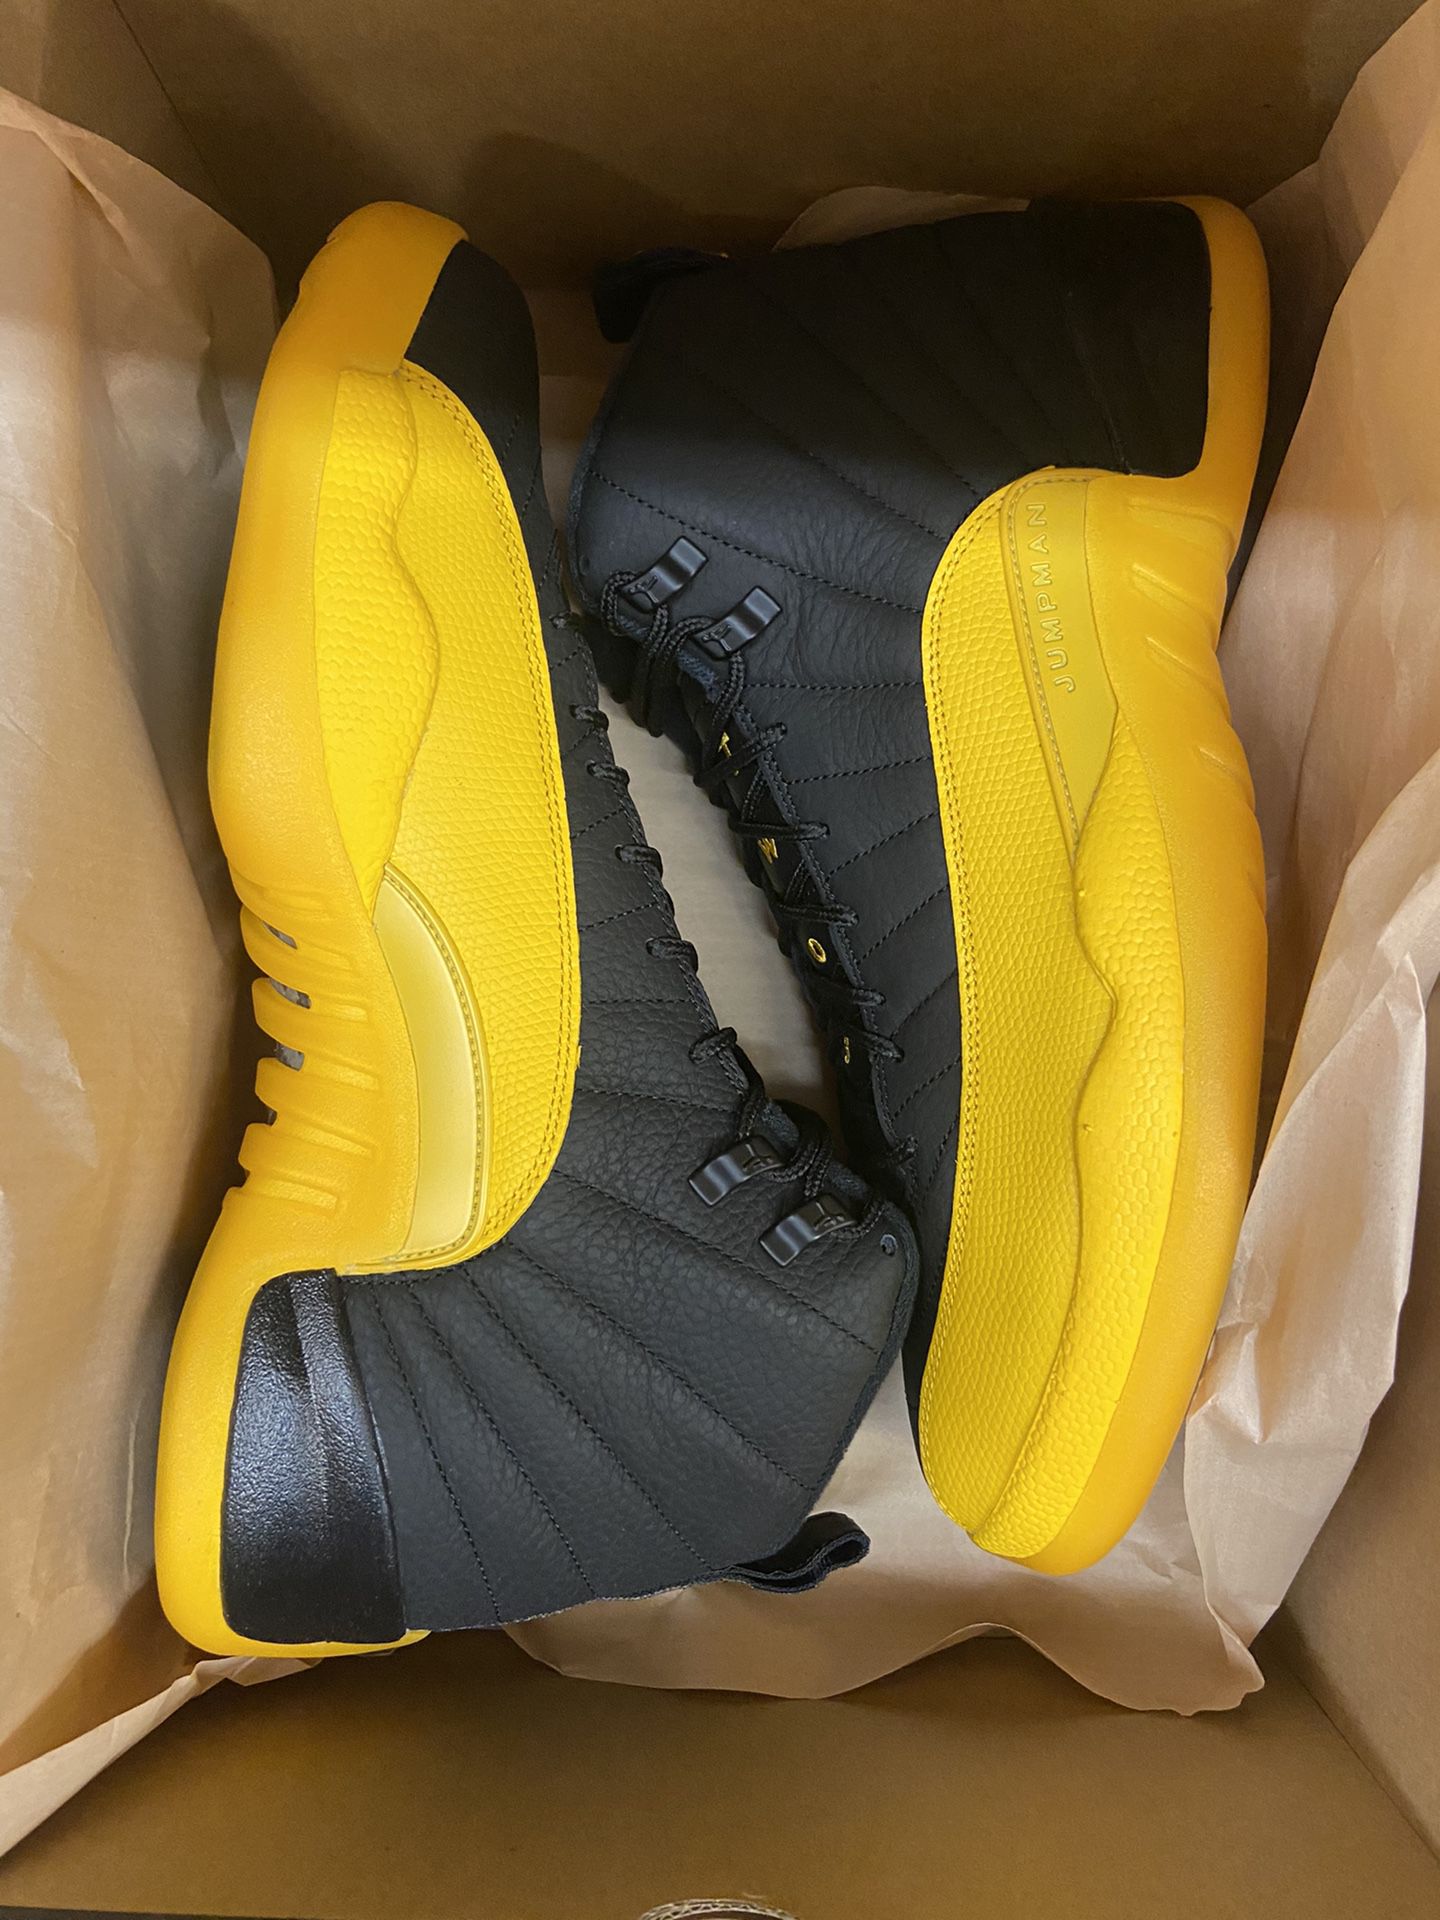 Jordan 12 Black Yellow Size 13